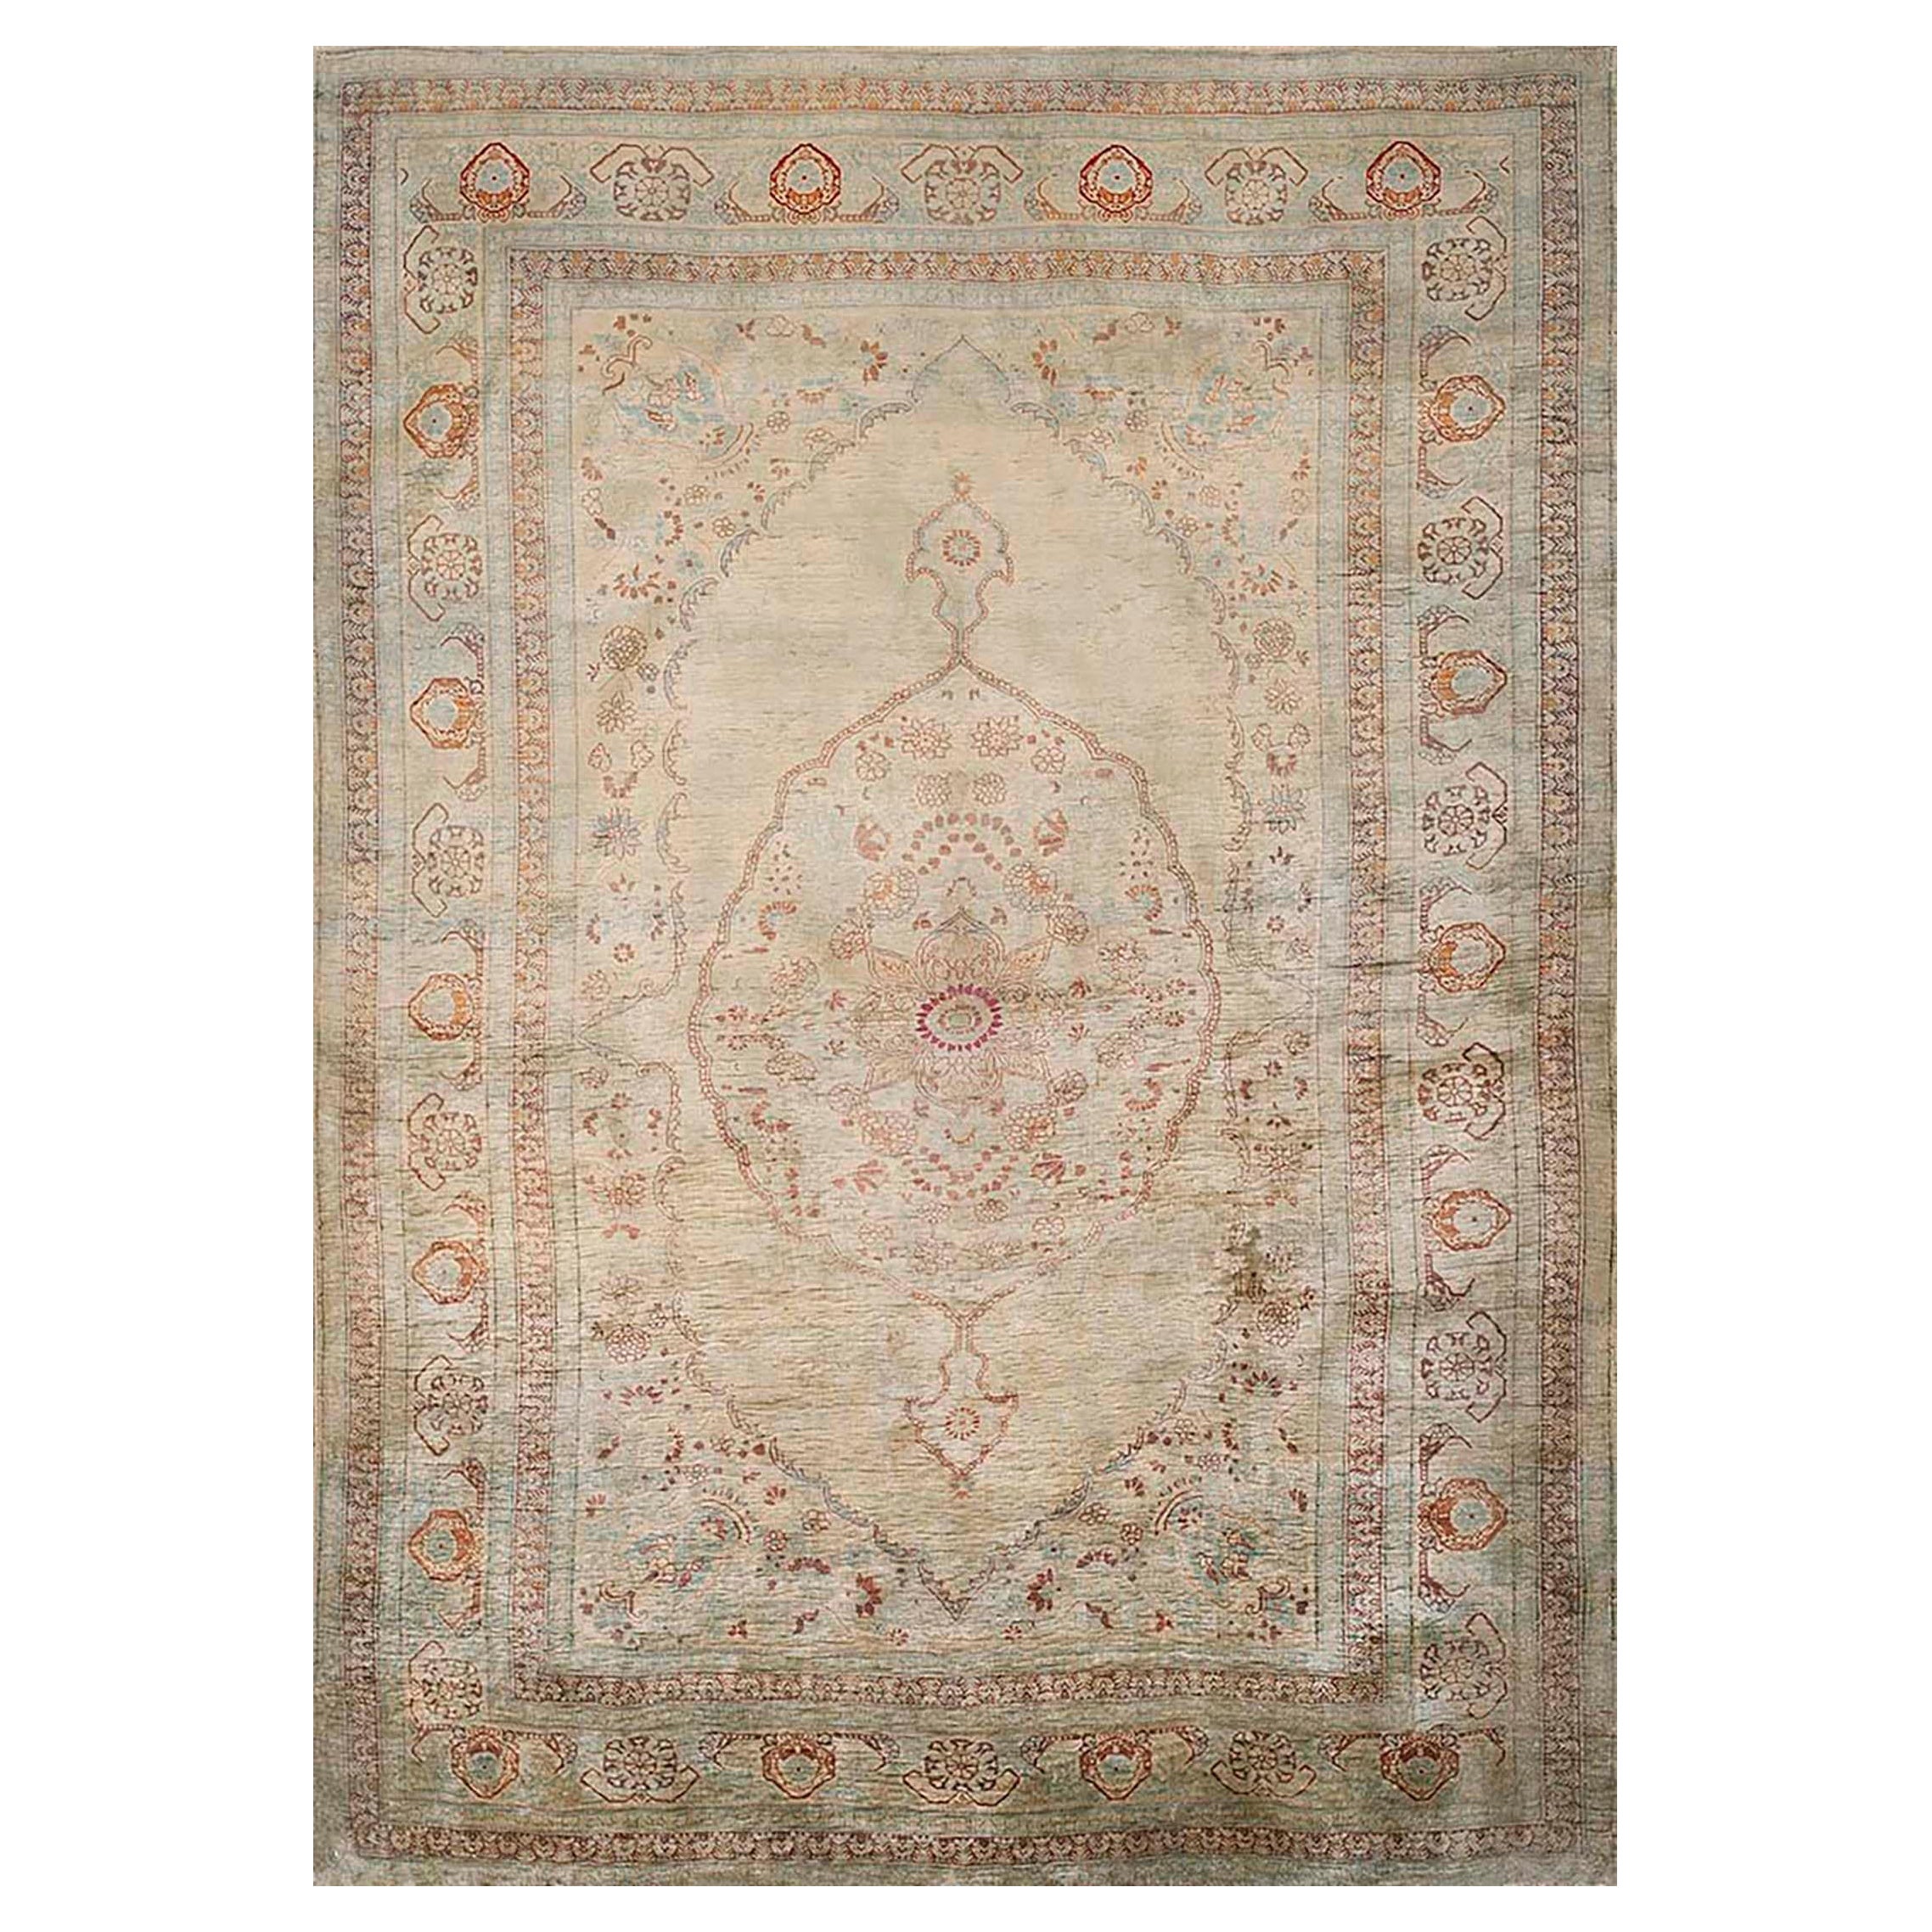 19th Century Persian Silk Tabriz Carpet  19th Century Persian Silk Tabriz Carpet